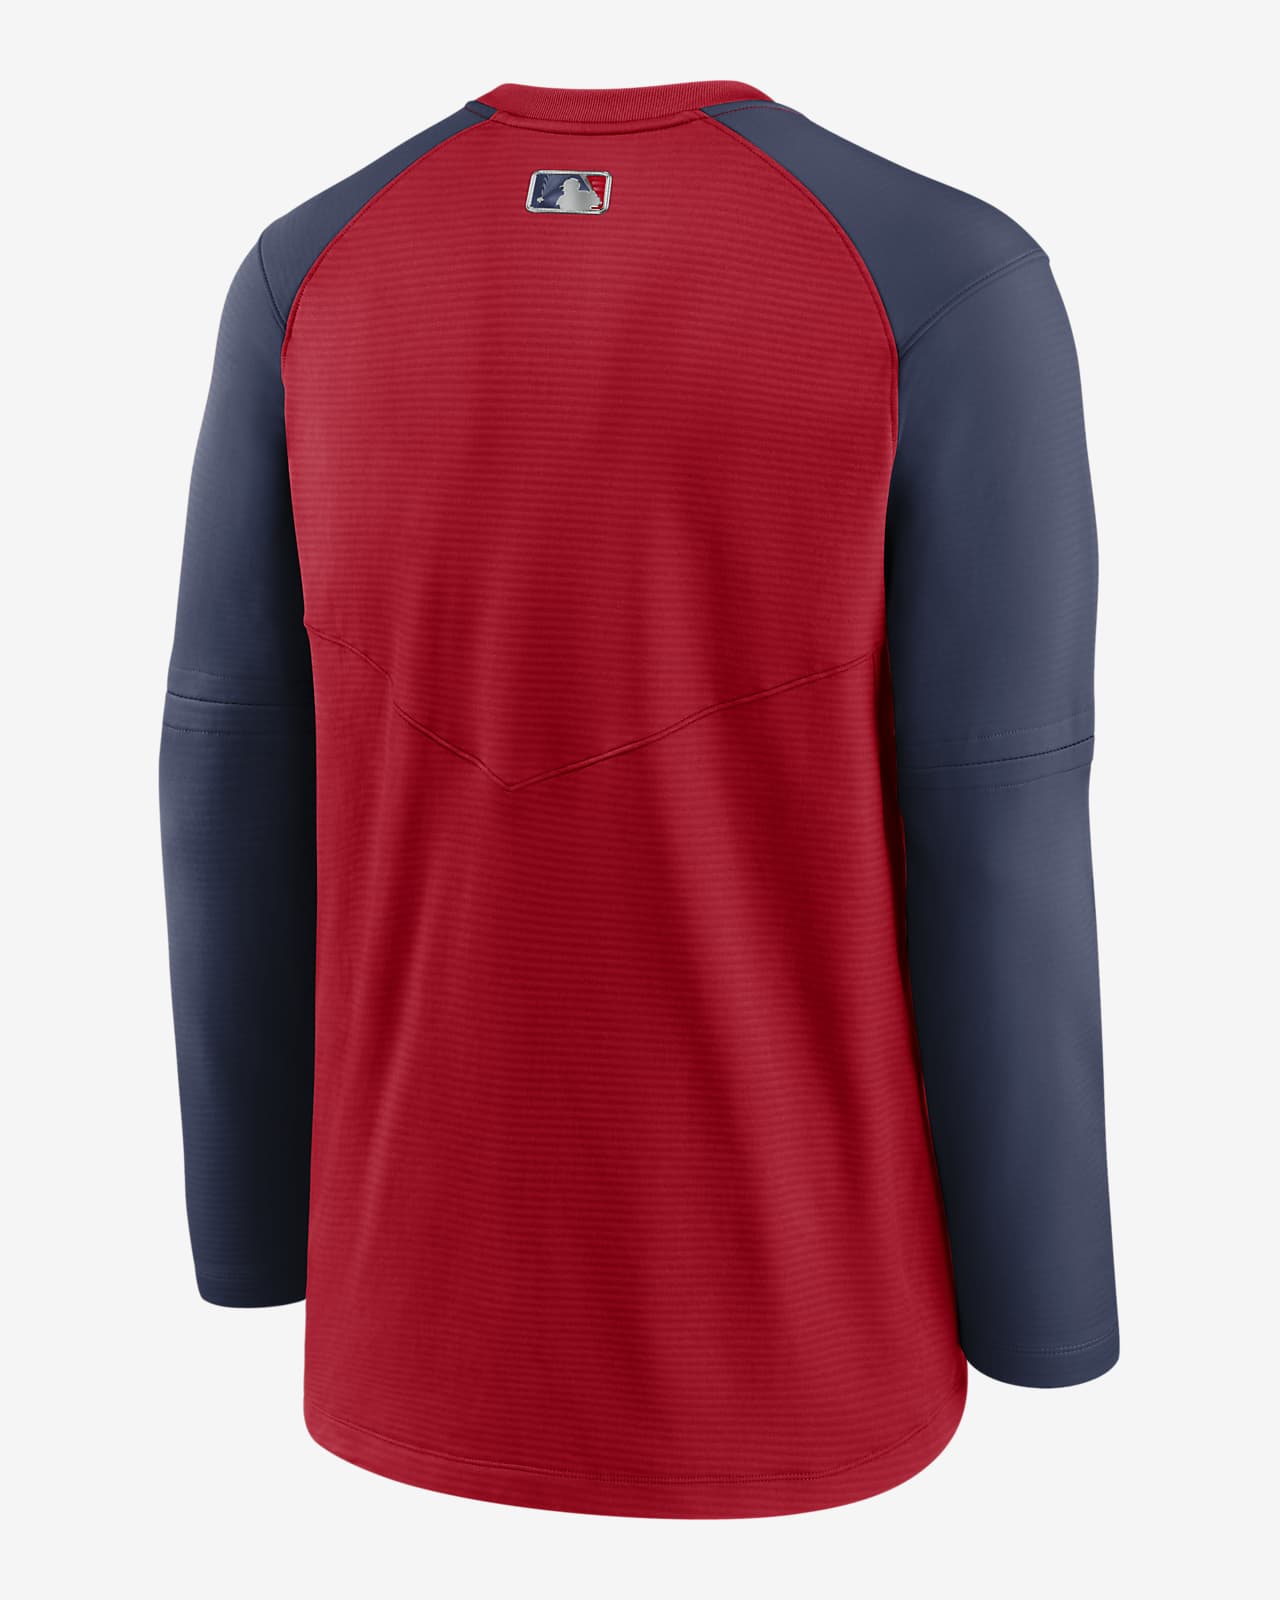 Nike, Shirts, Nike Pro Combat Hypercool St Louis Cardinals Fitted Xl  Baseball Red Grey Shirt